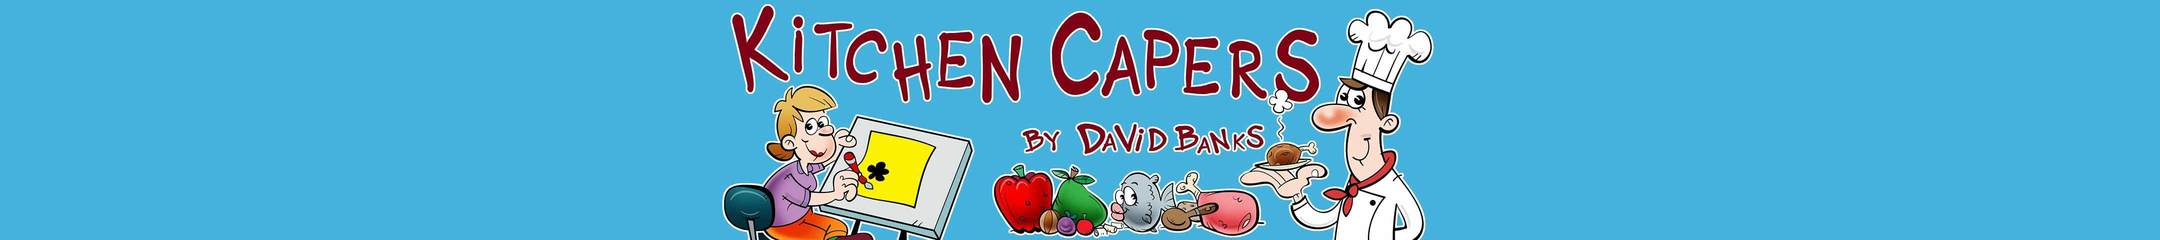 Kitchen Capers by David Banks | Read Comic Strips at GoComics.com